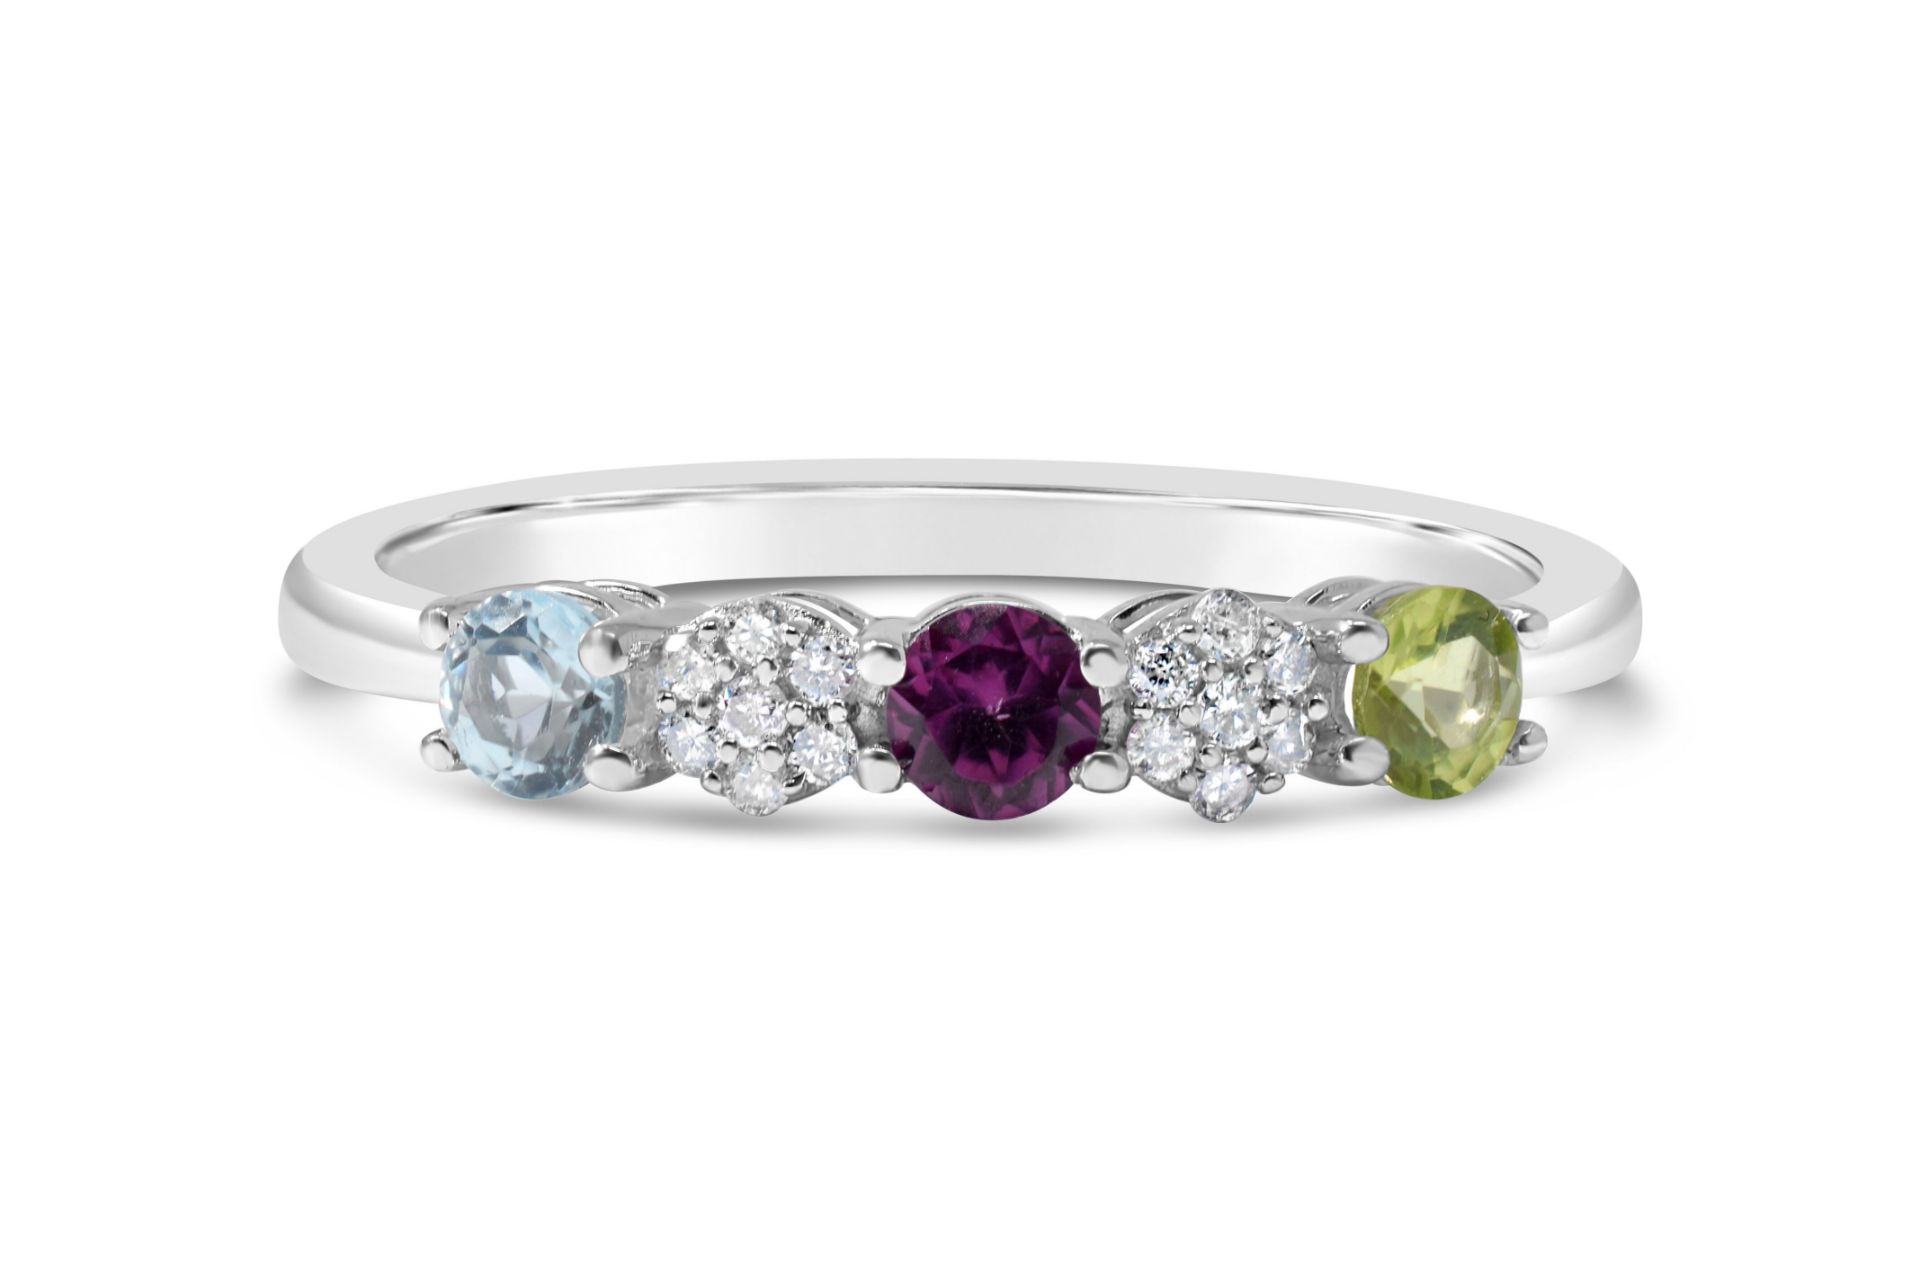 Multicoloured gem stone with diamod eternity ring, - Image 2 of 2